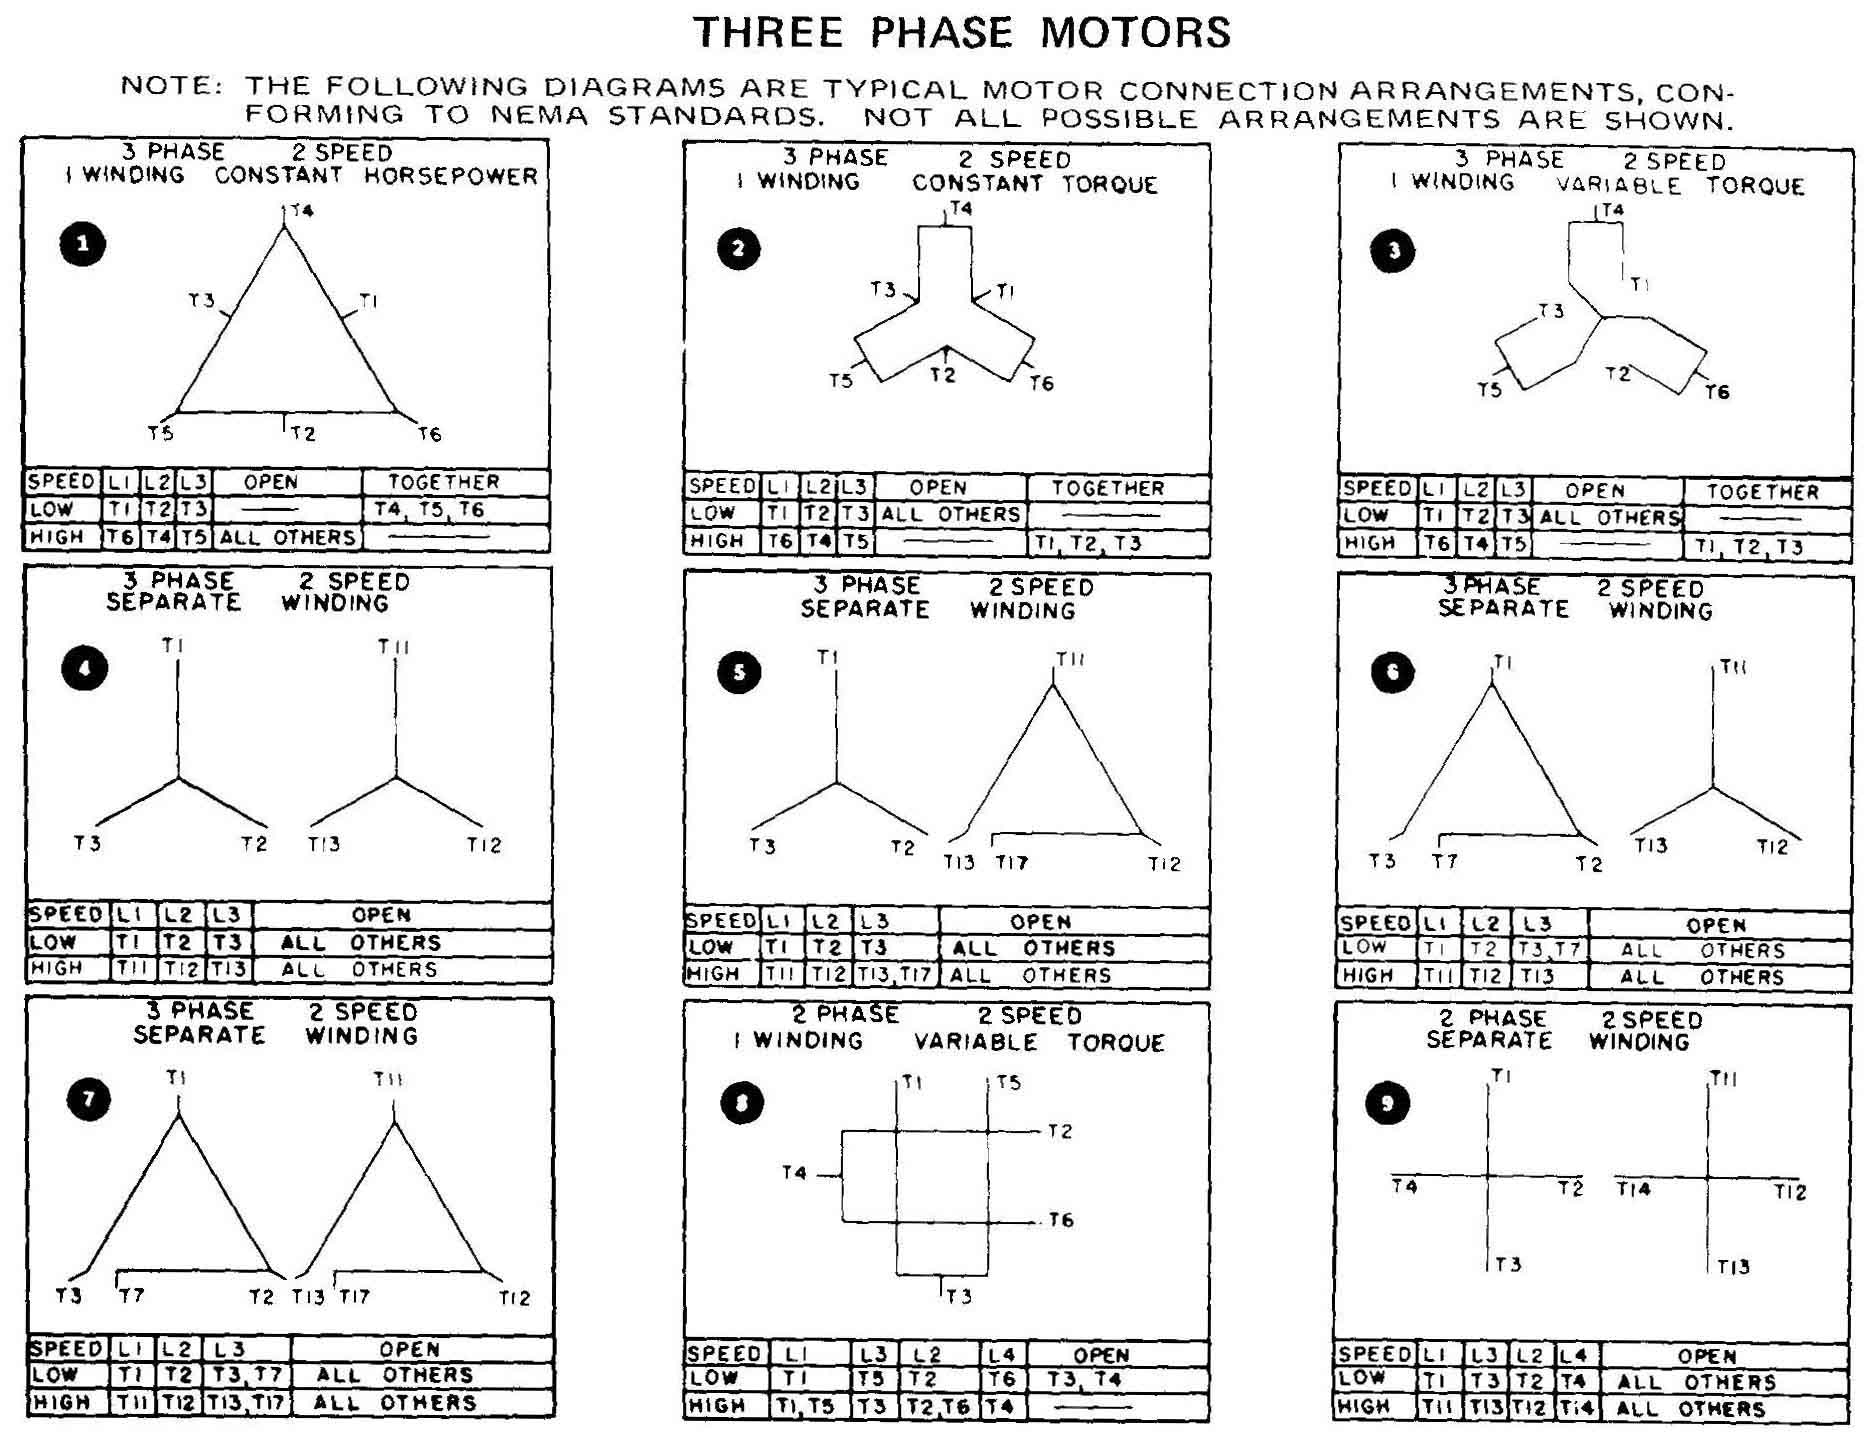 3 Phase Motor Wiring Diagram 12 Leads | Wiring Diagram